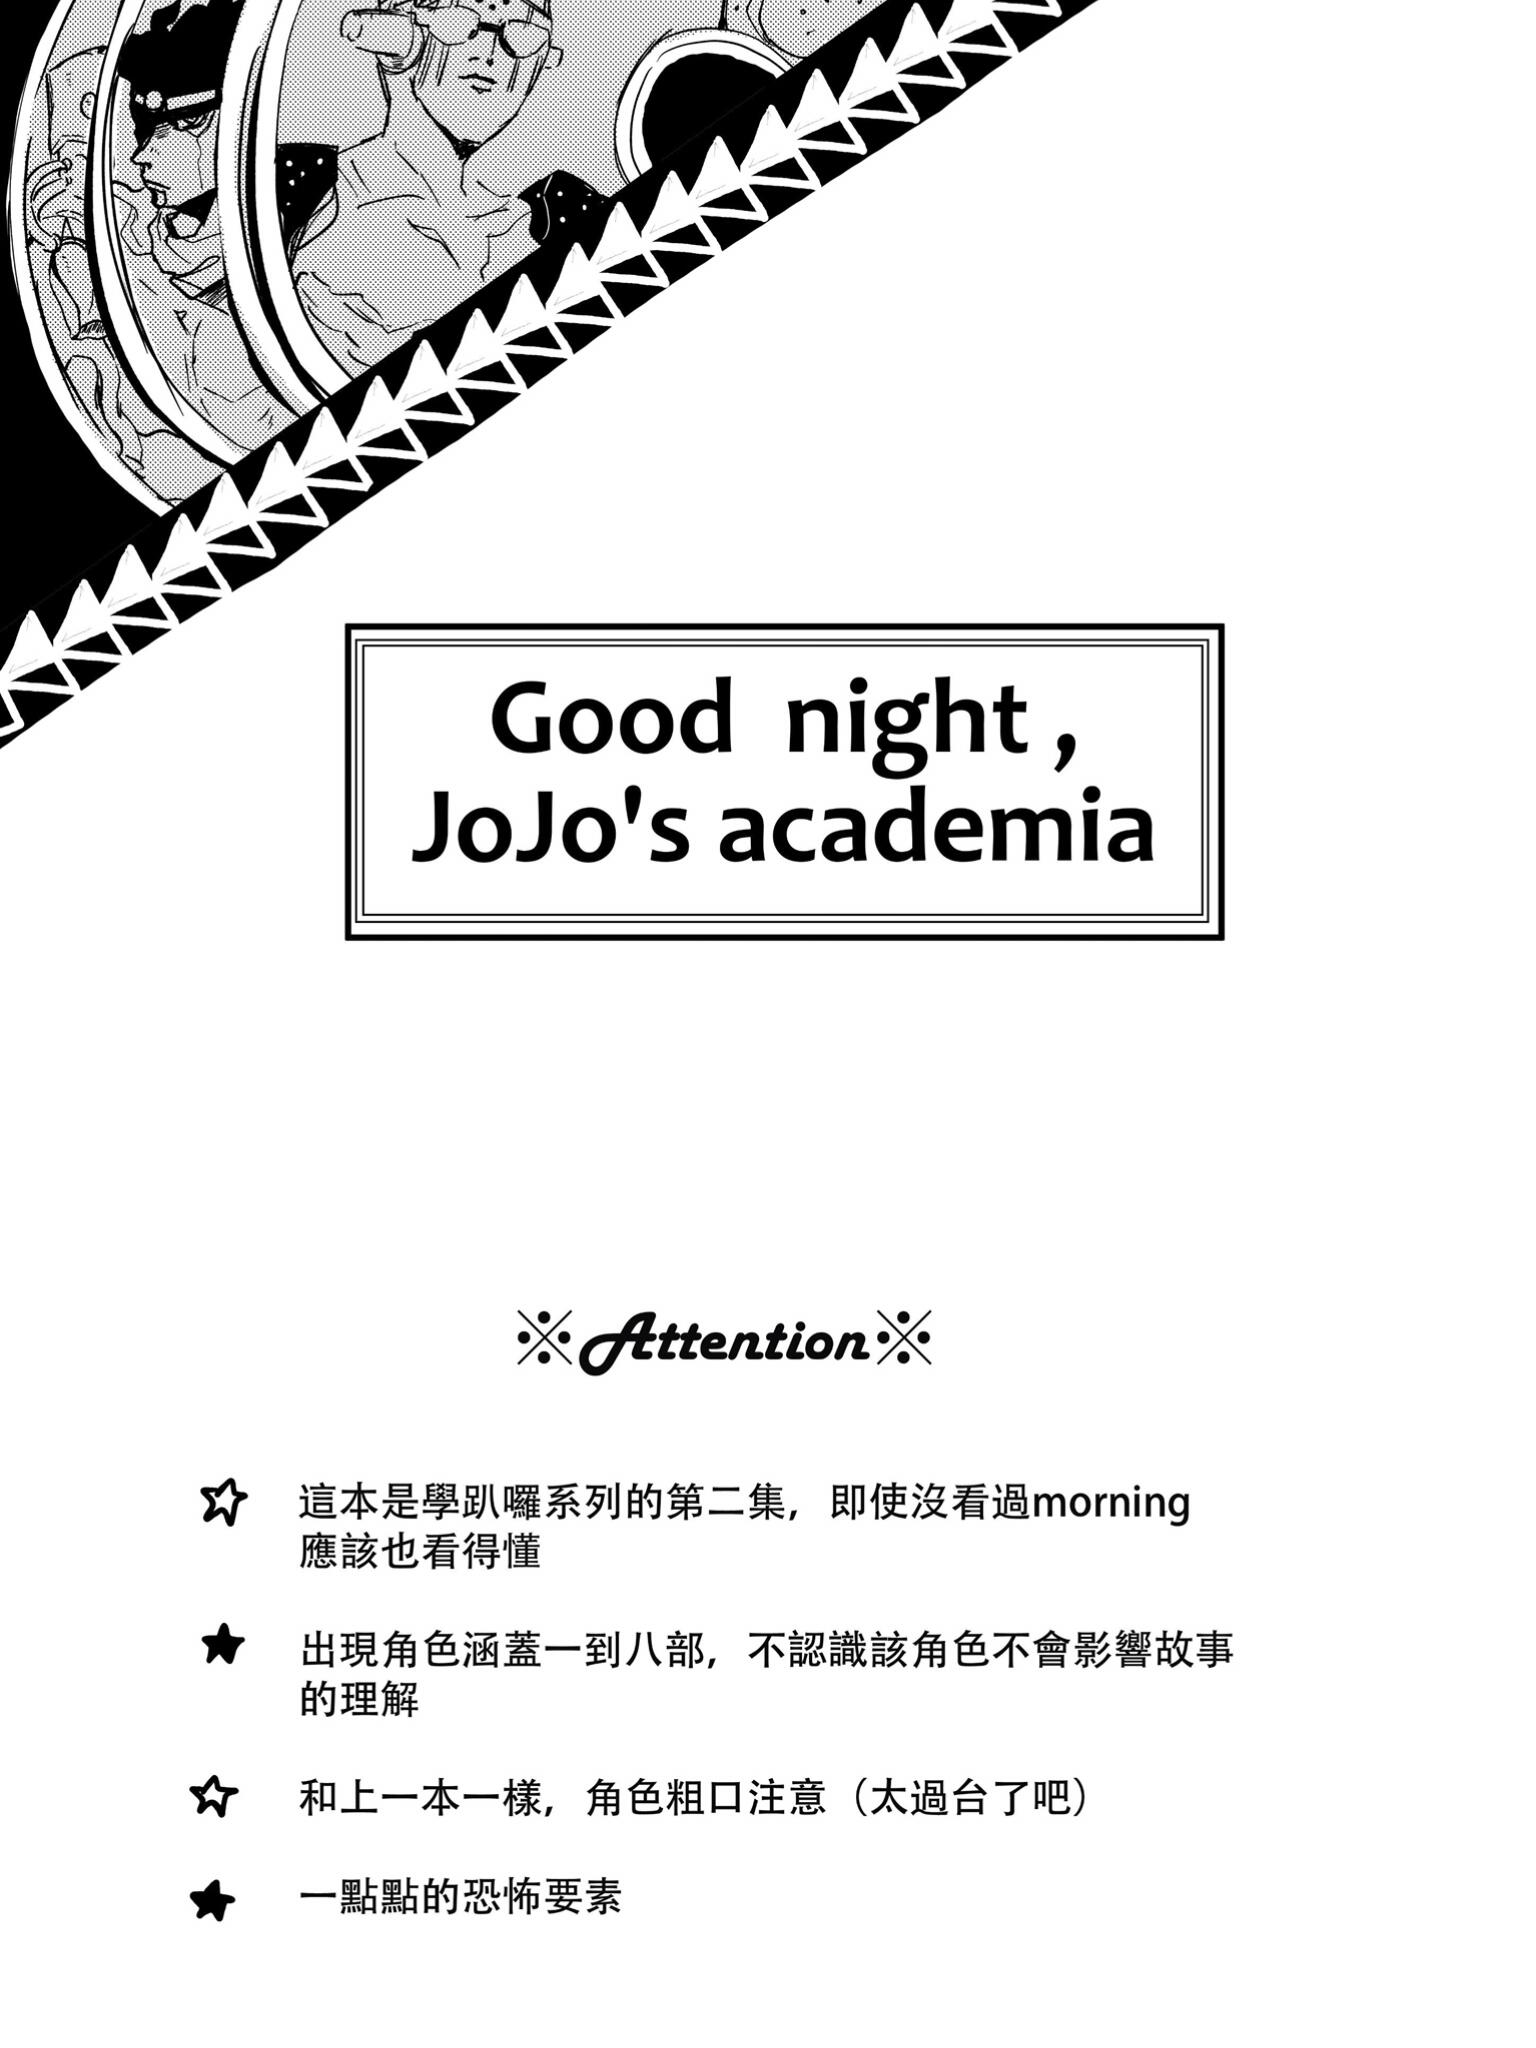 【學園現pa】Good night, Jojo’s academia